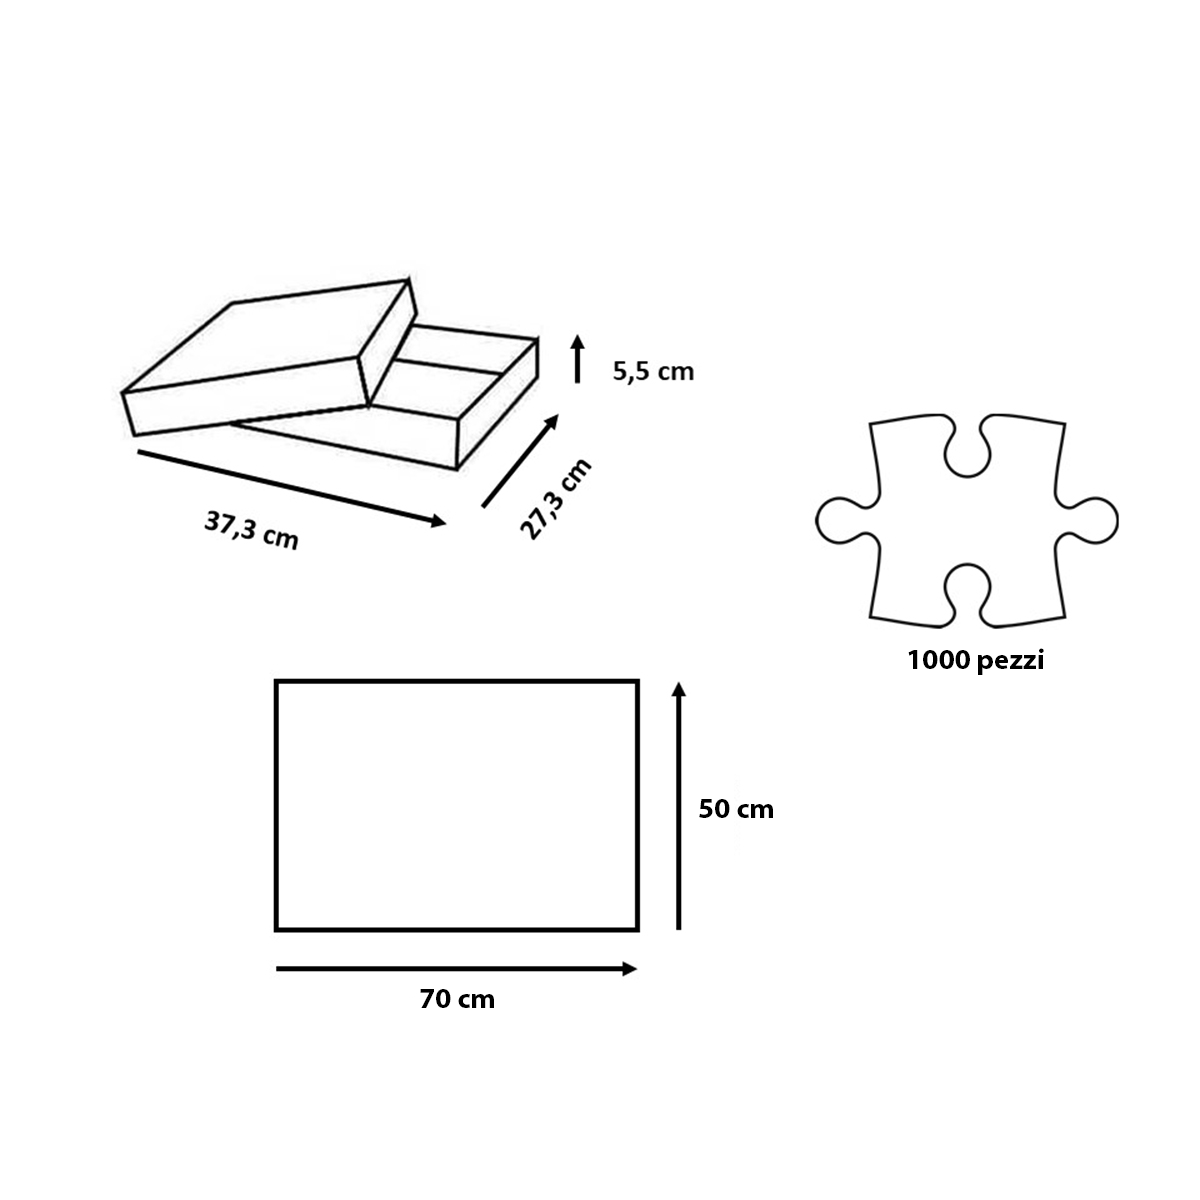 Ravensburger puzzle per adulti - 1000 pezzi - diabolik - dimensione puzzle: 50x70 cm. - RAVENSBURGER